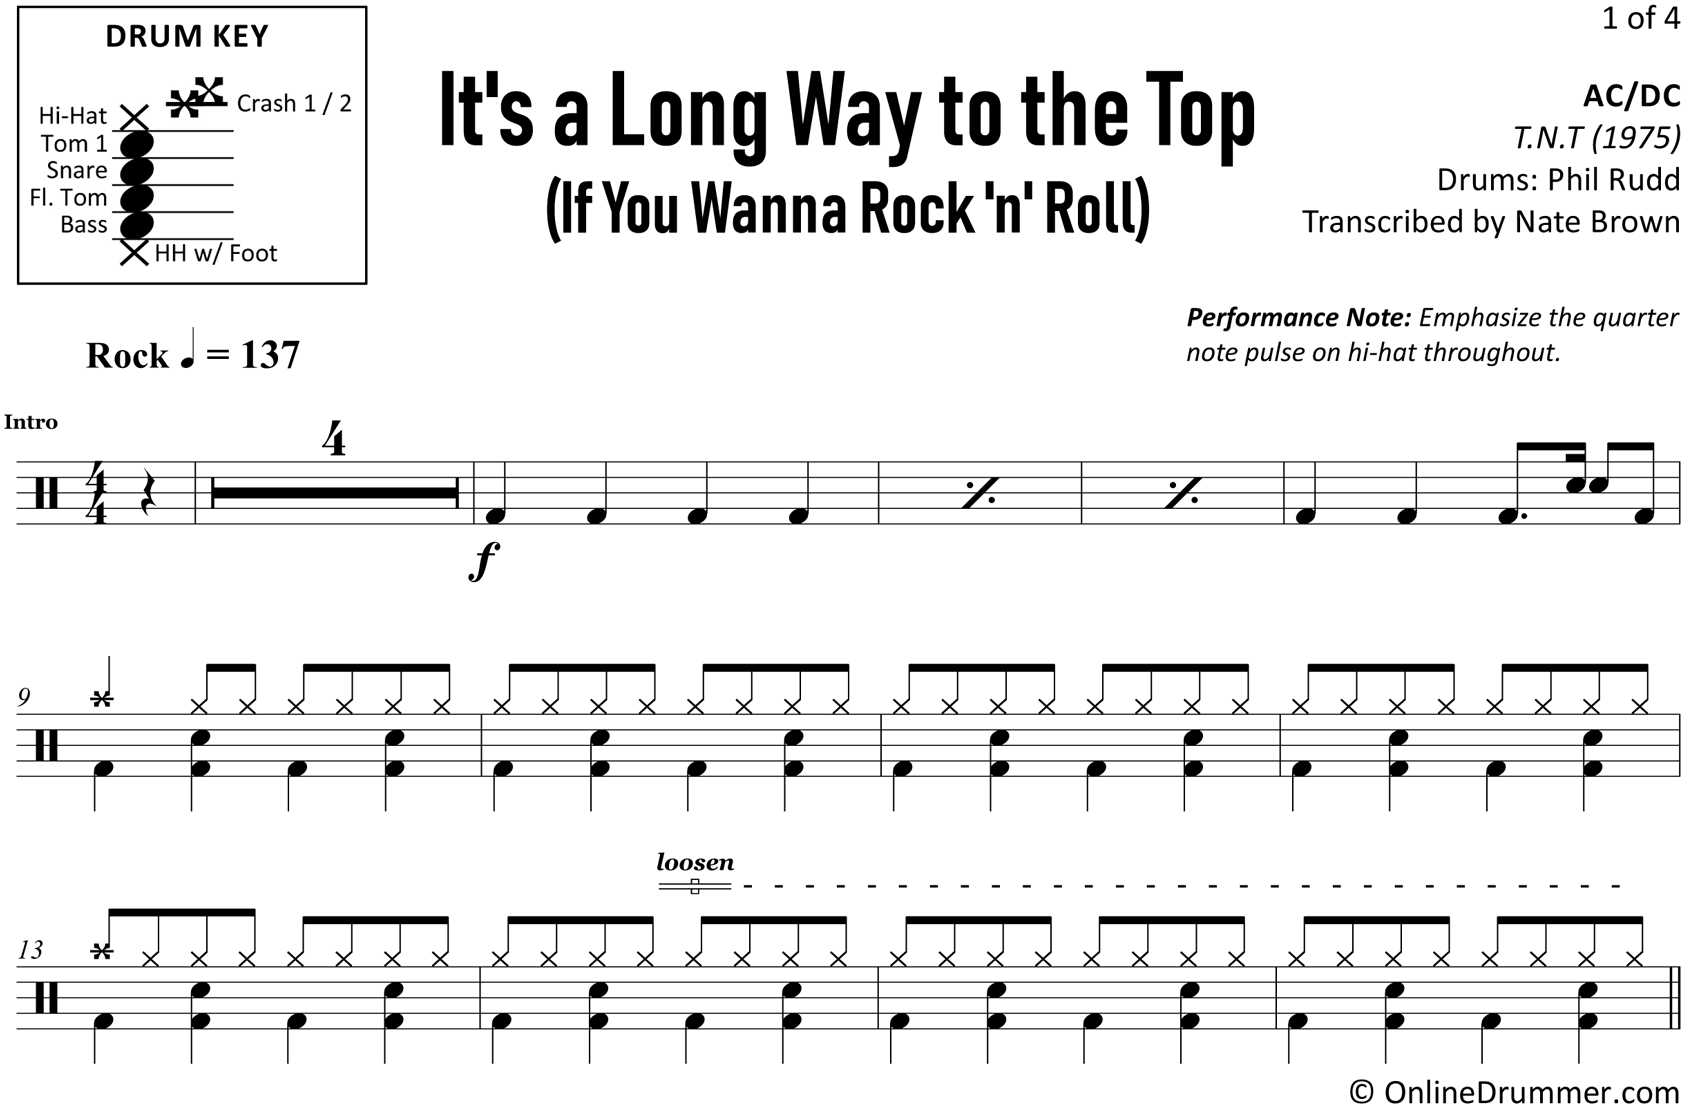 It's a Long Way to the Top (If You Wanna Rock 'n' Roll) - ACDC - Drum Sheet Music